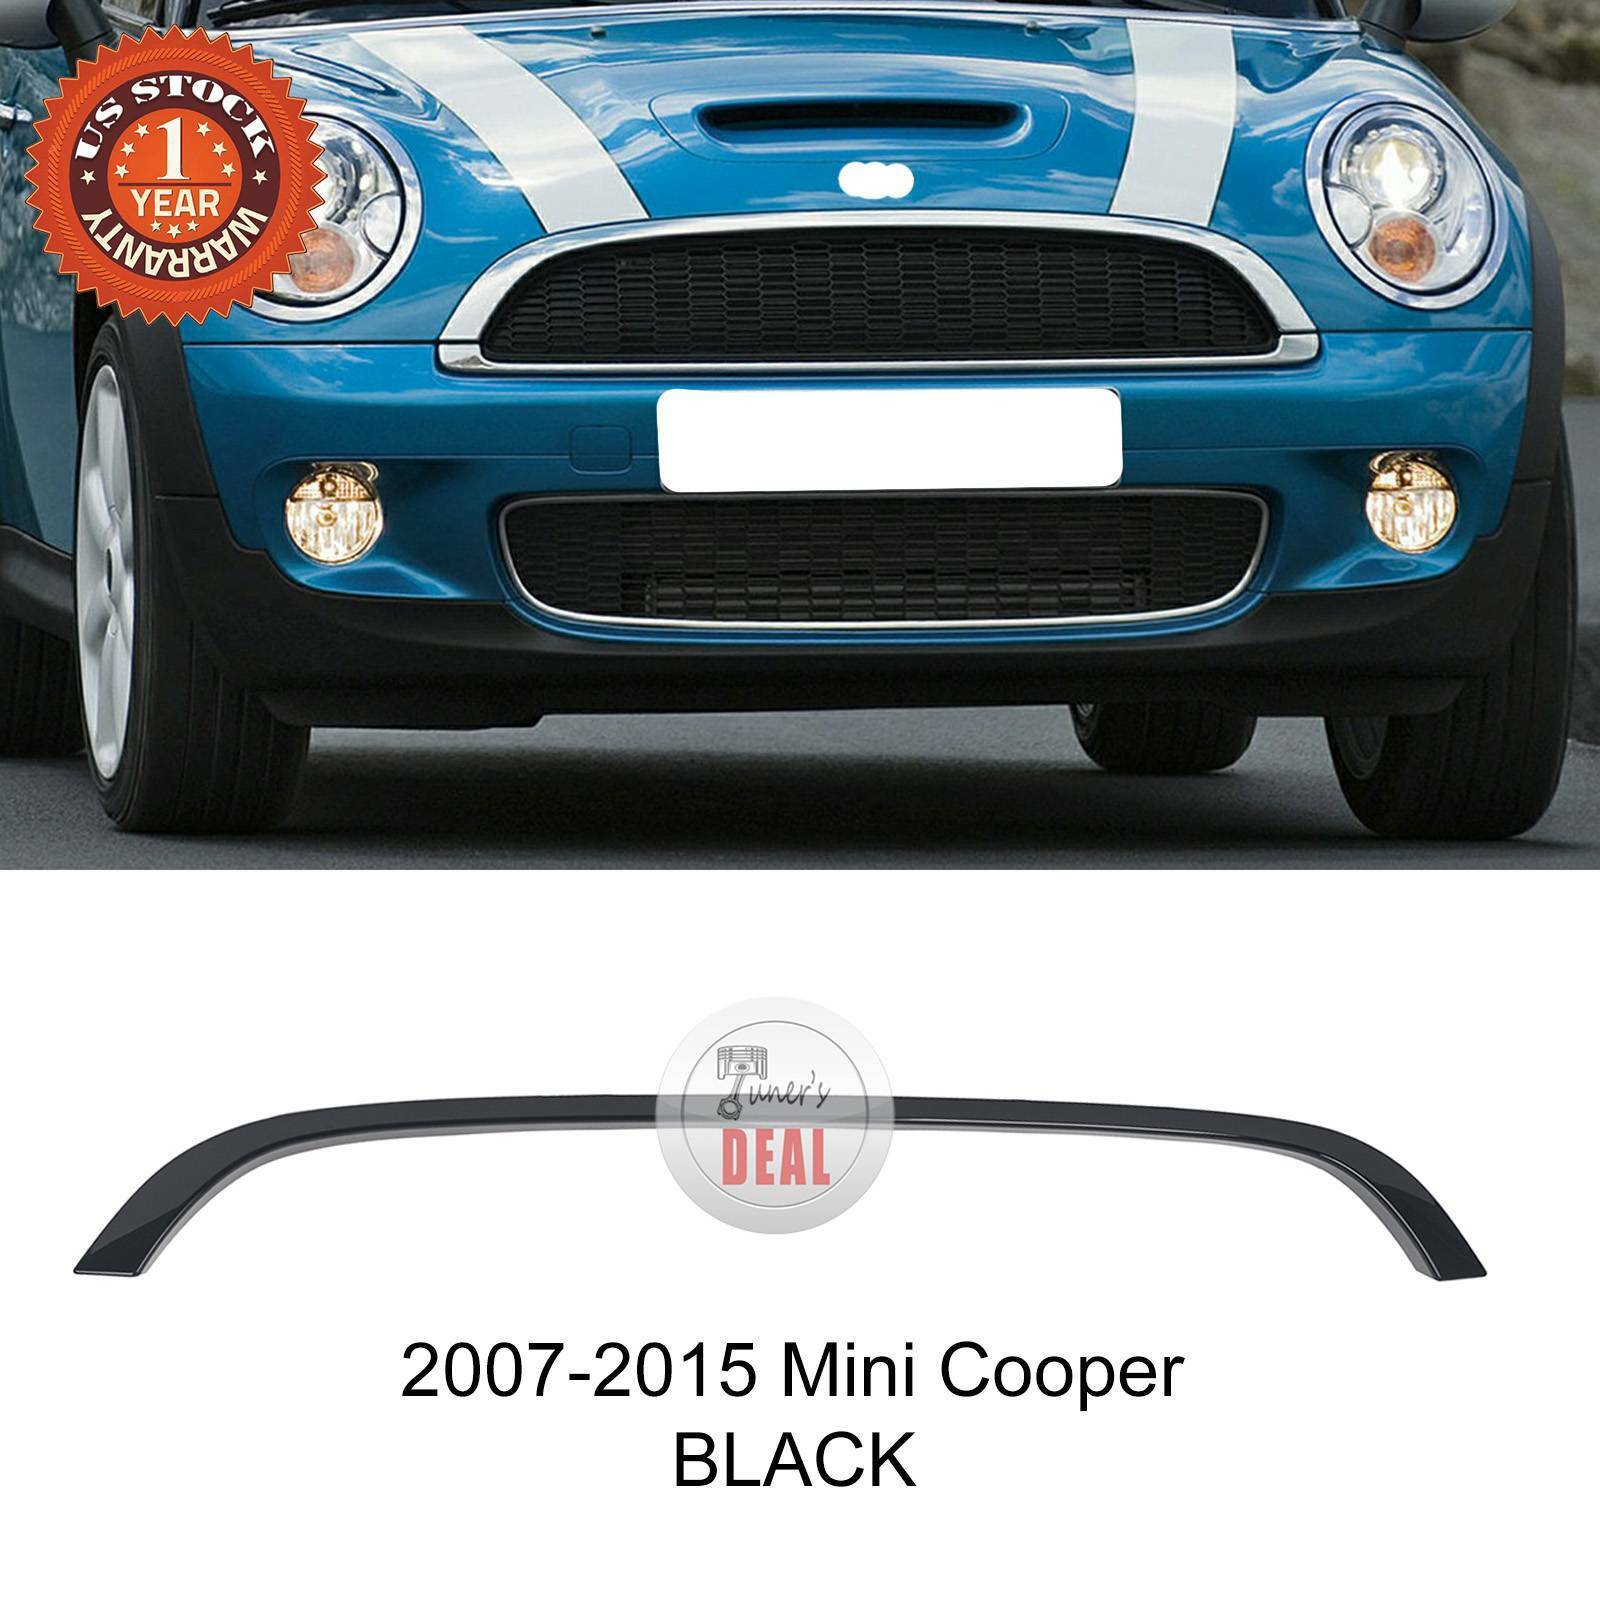 Grille Hood Molding Trim Moulding Black For Mini Cooper 2007-2015 OE51132751040